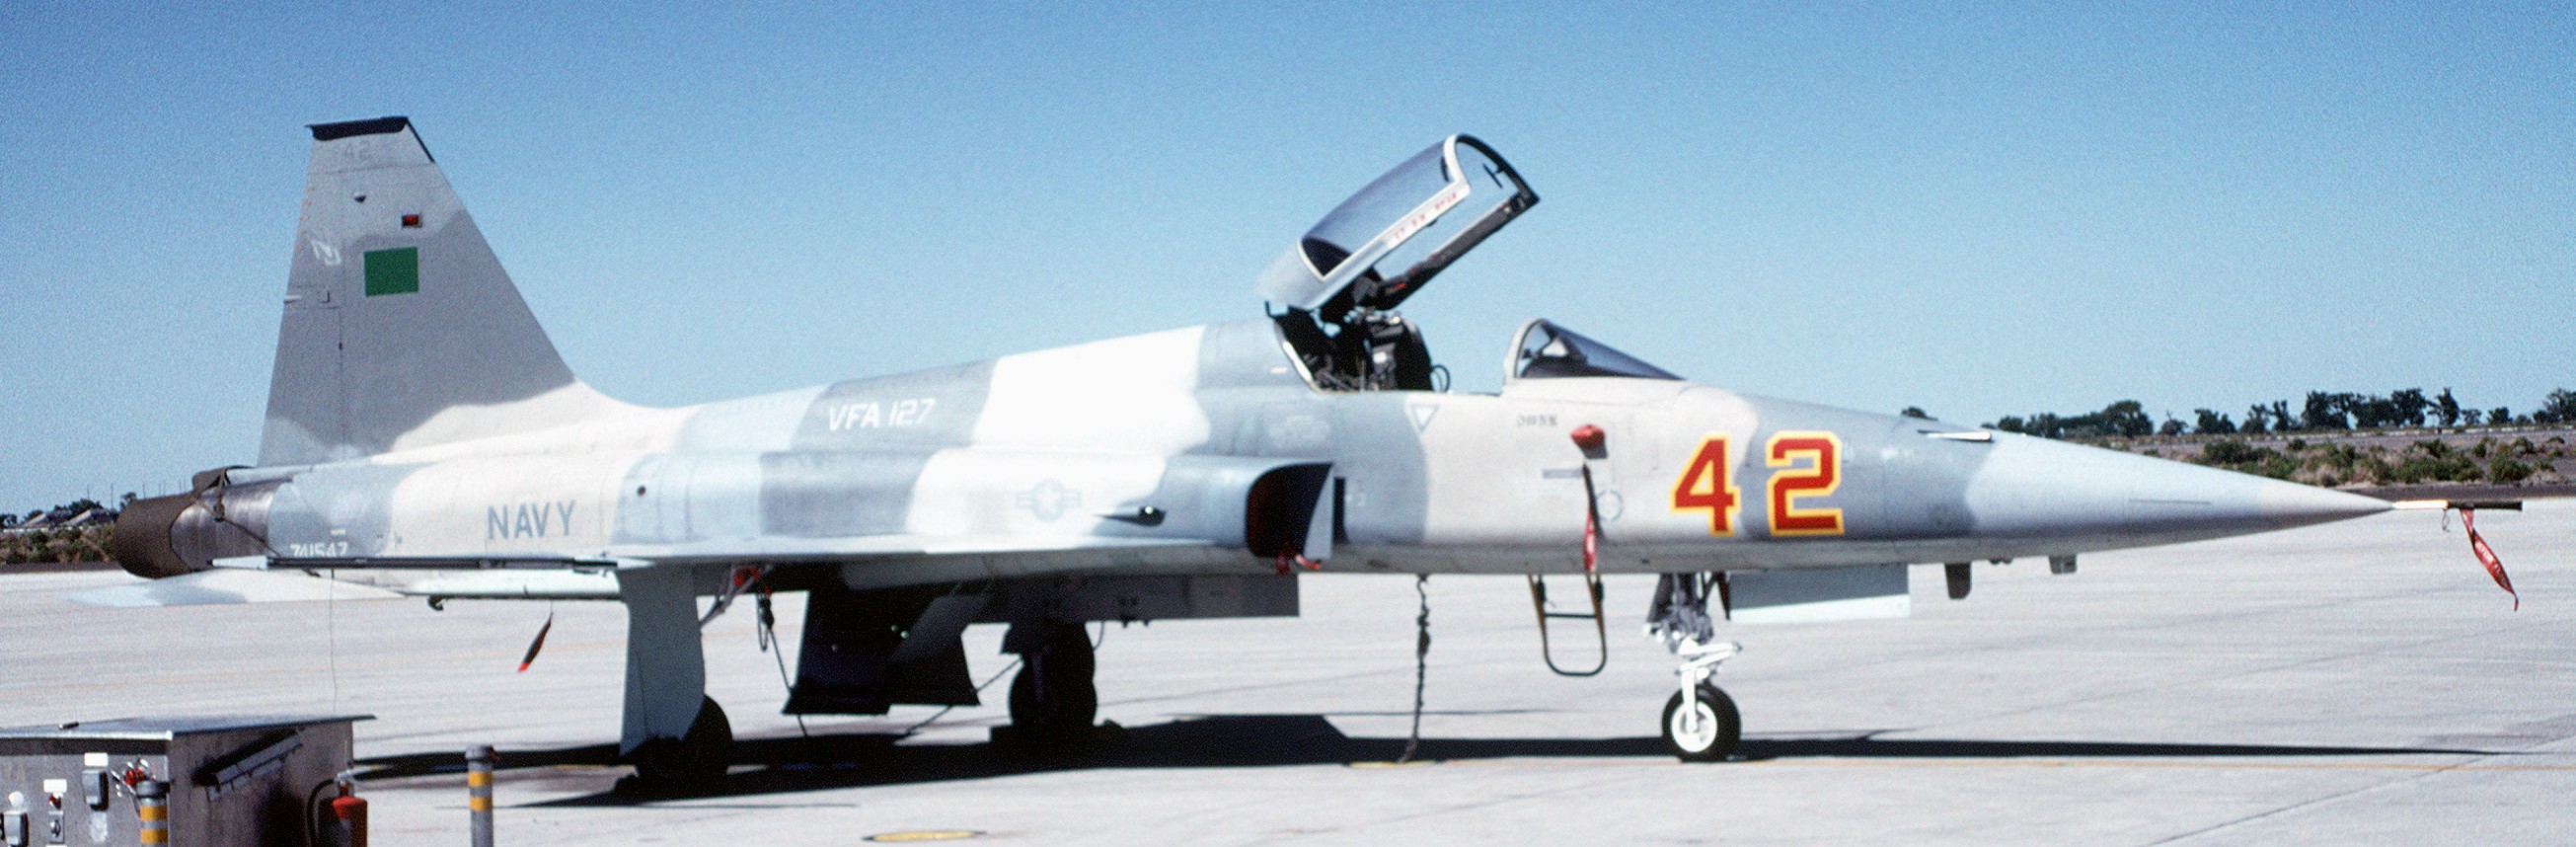 vfa-127 desert bogeys strike fighter squadron f-5e tiger 1993 15